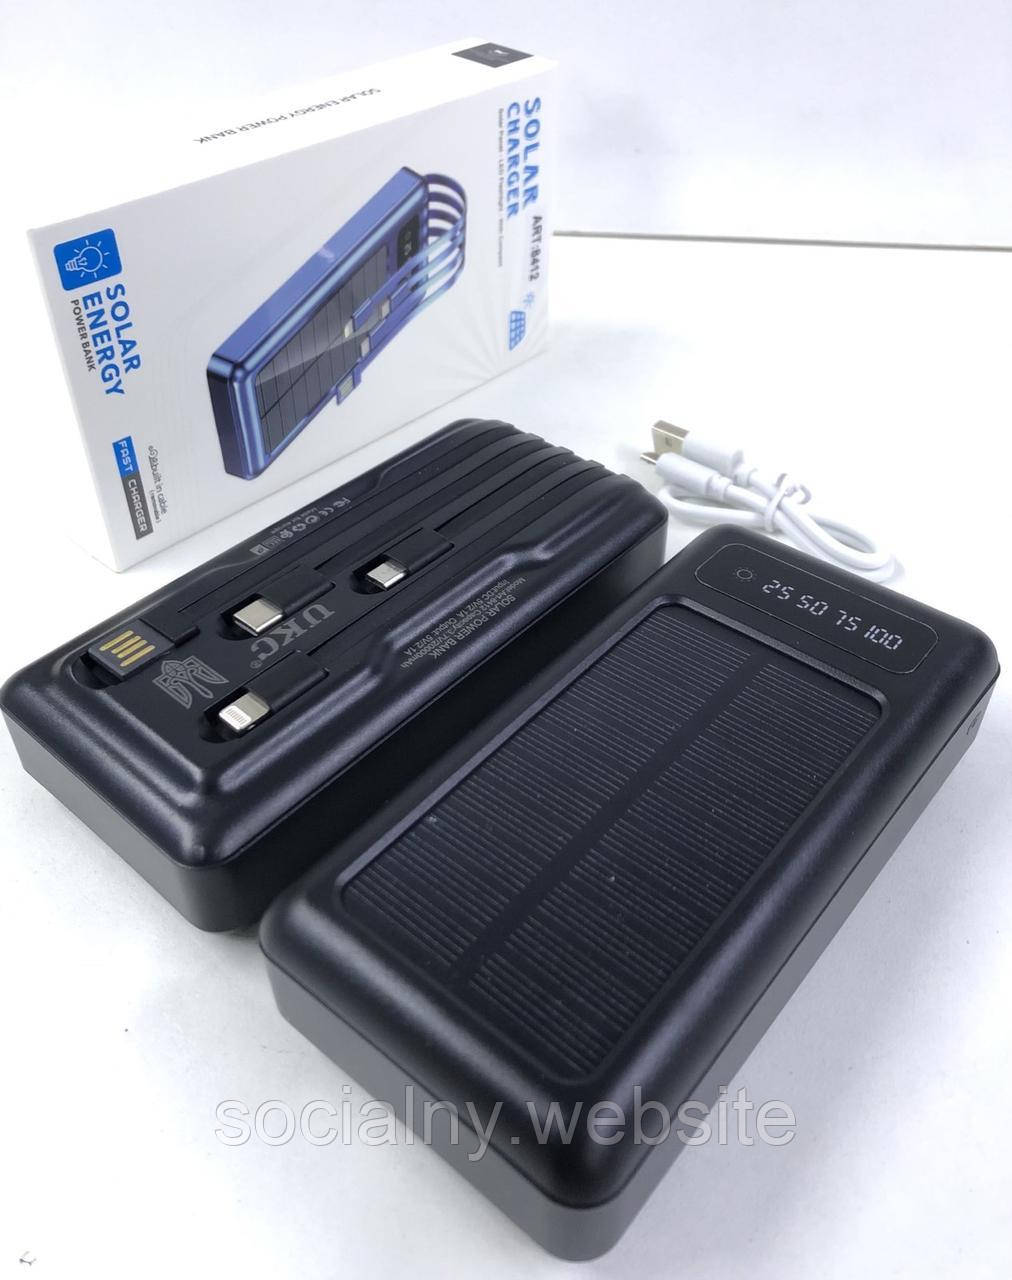 Зовнішній акумулятор POWER BANK 8412 Solar Charger із сонячною панеллю і Led лампою USB 20 000 mAh